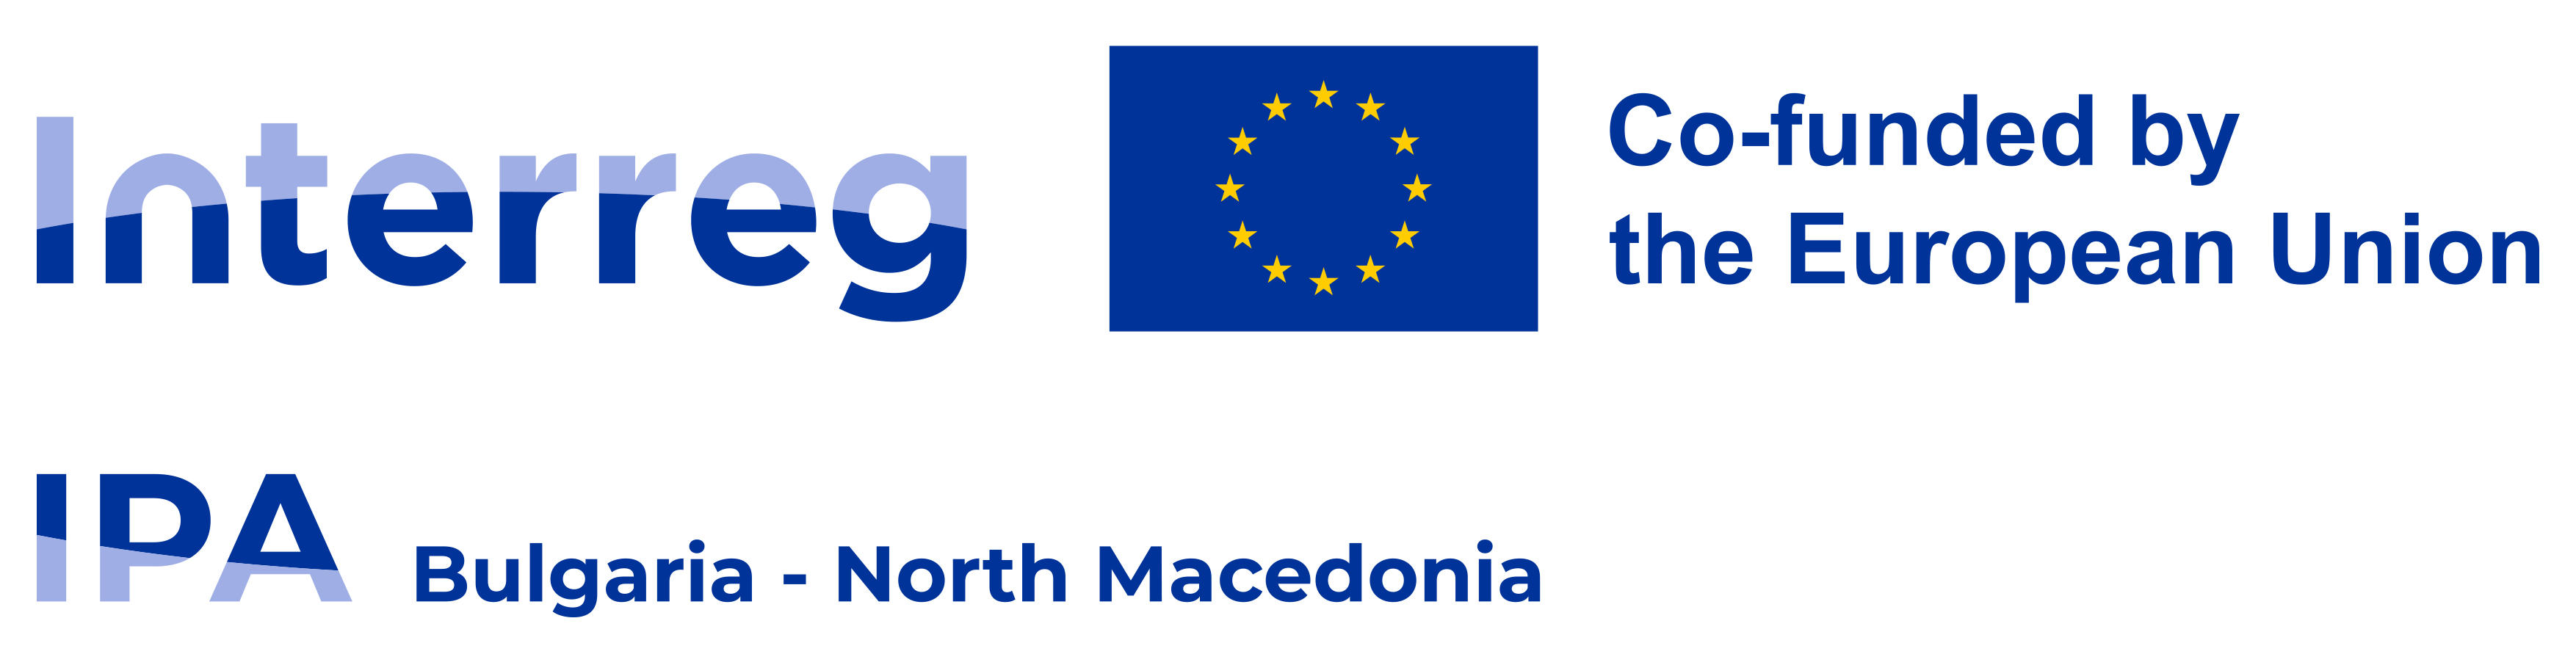 Logo of Interreg VI-A IPA Bulgaria - North Macedonia Programme